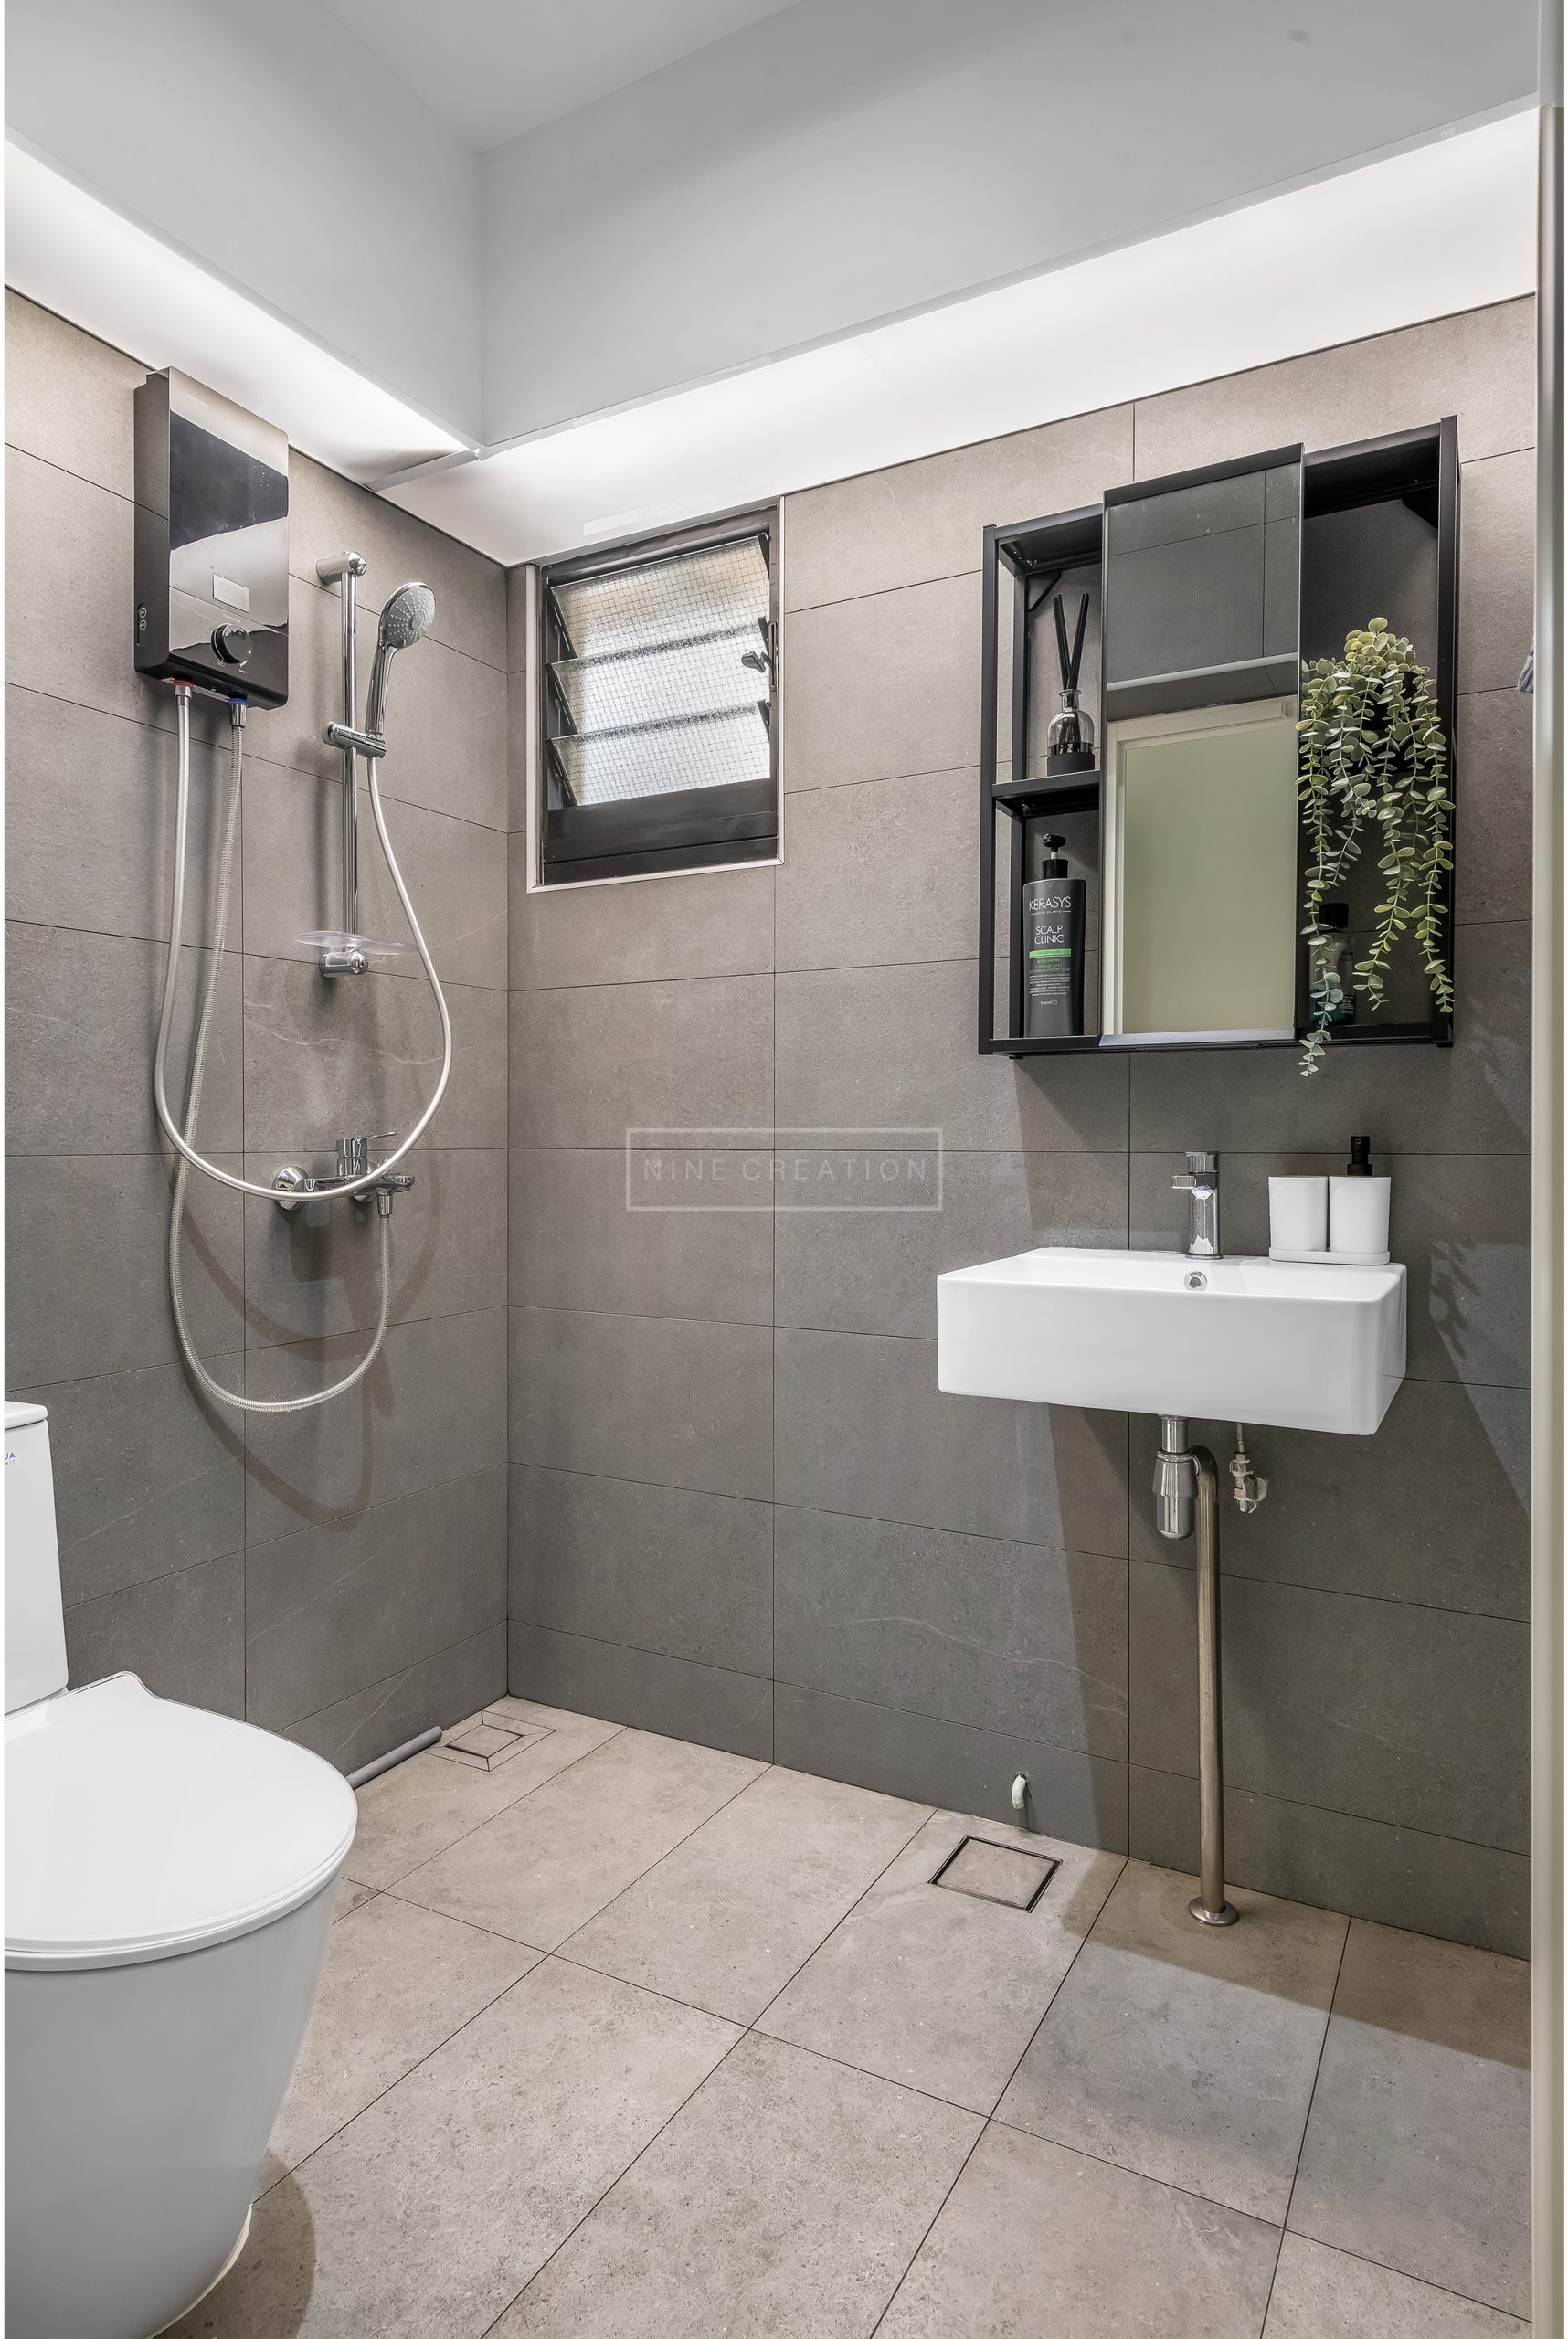 10 Space-Saving Bathroom Design Ideas for Your Home